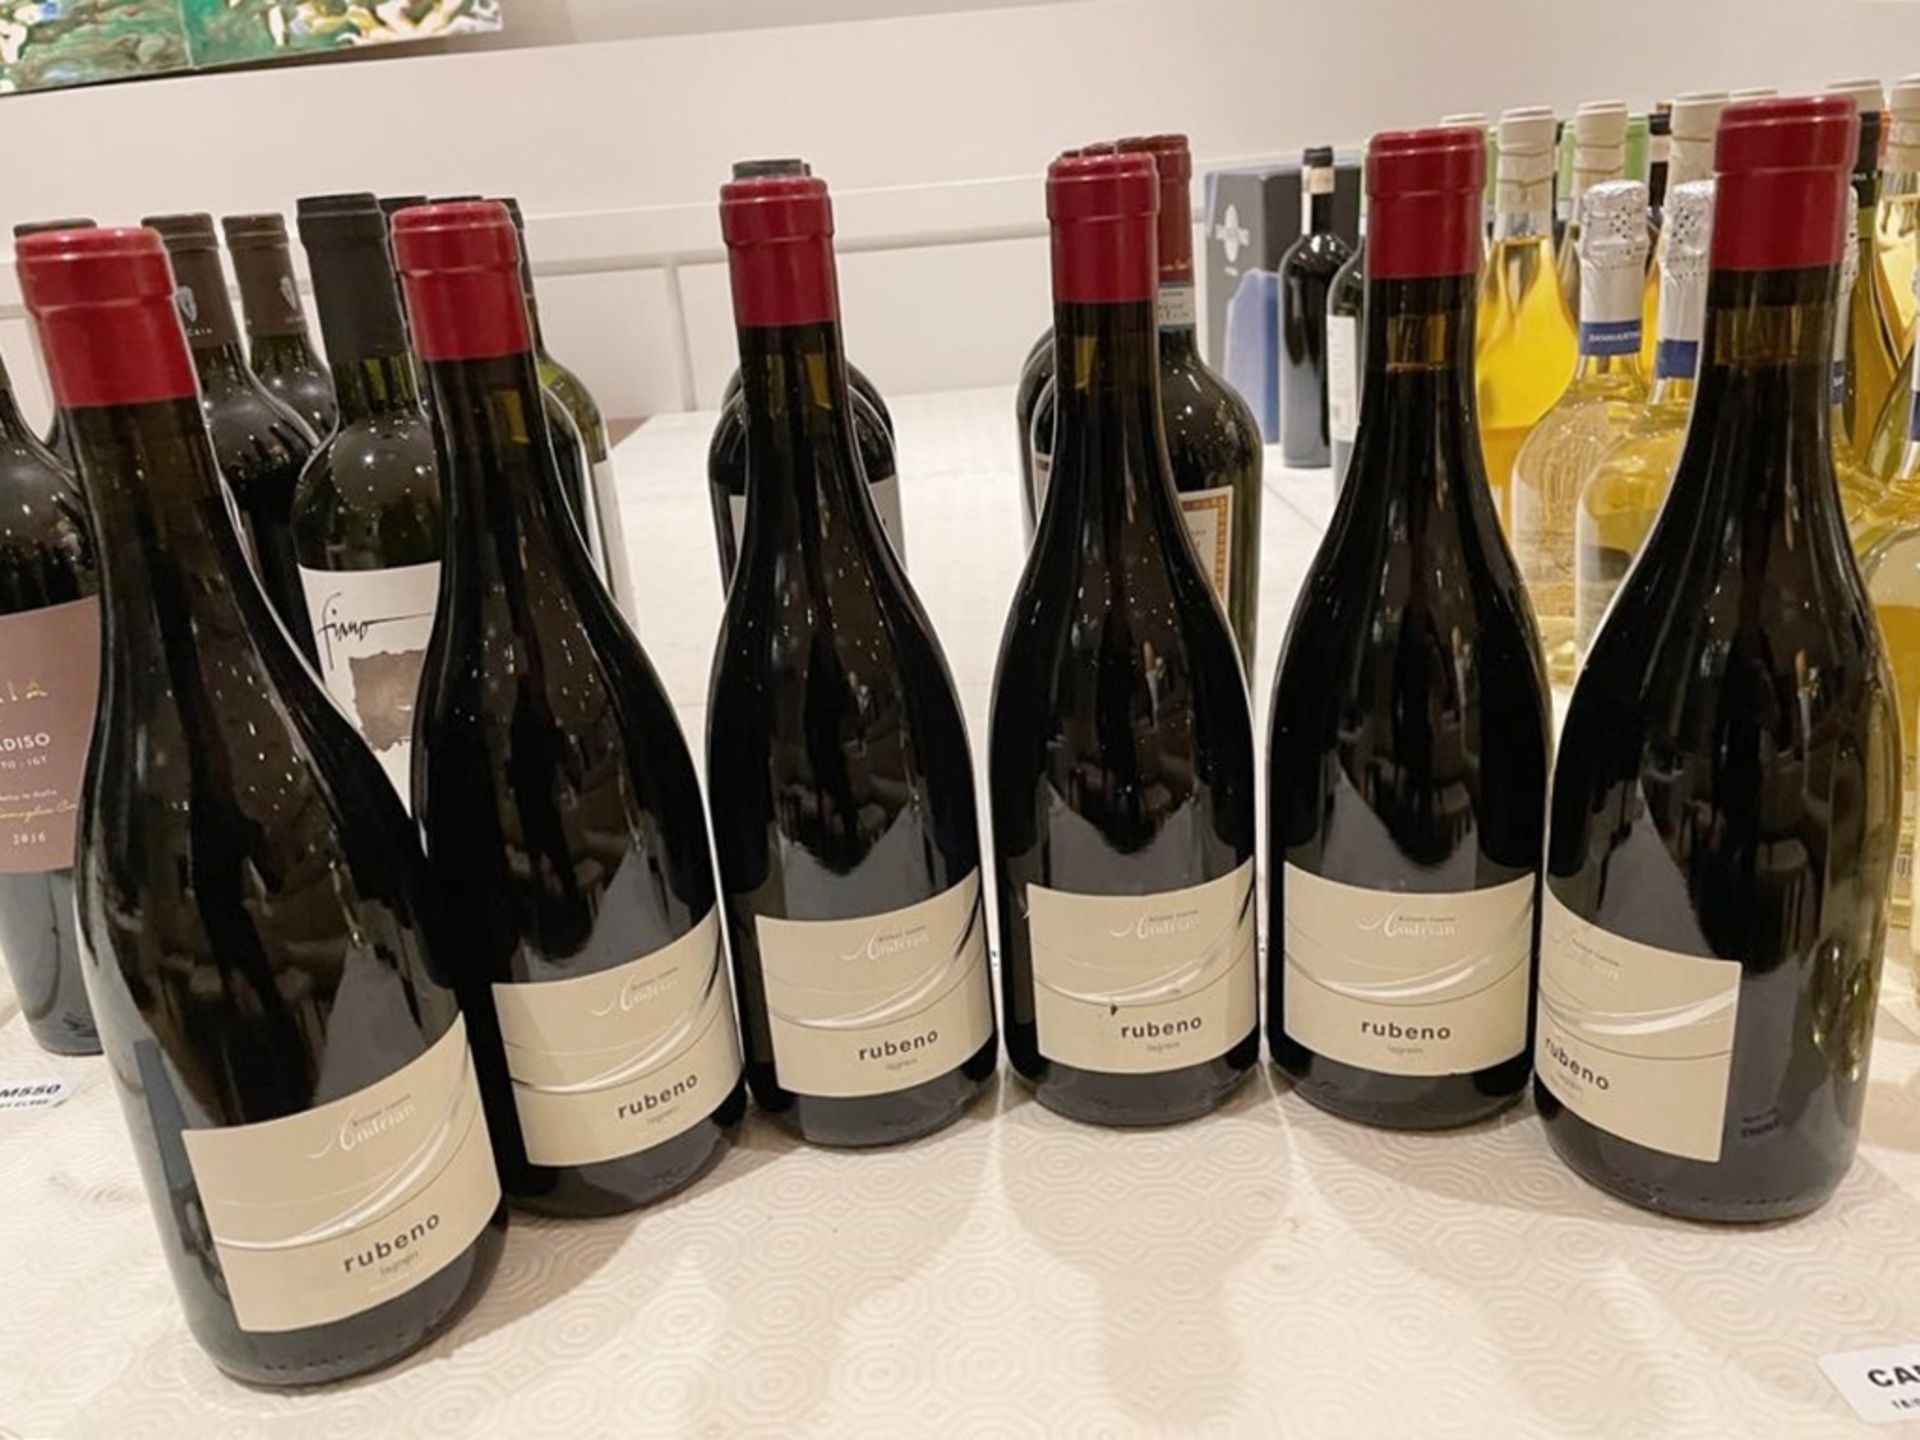 6 x Bottles Of RUBENO LAGRIEN - New/Unopened Restaurant Stock - 2019 - 0.75l - Ref: CAM553 - CL612